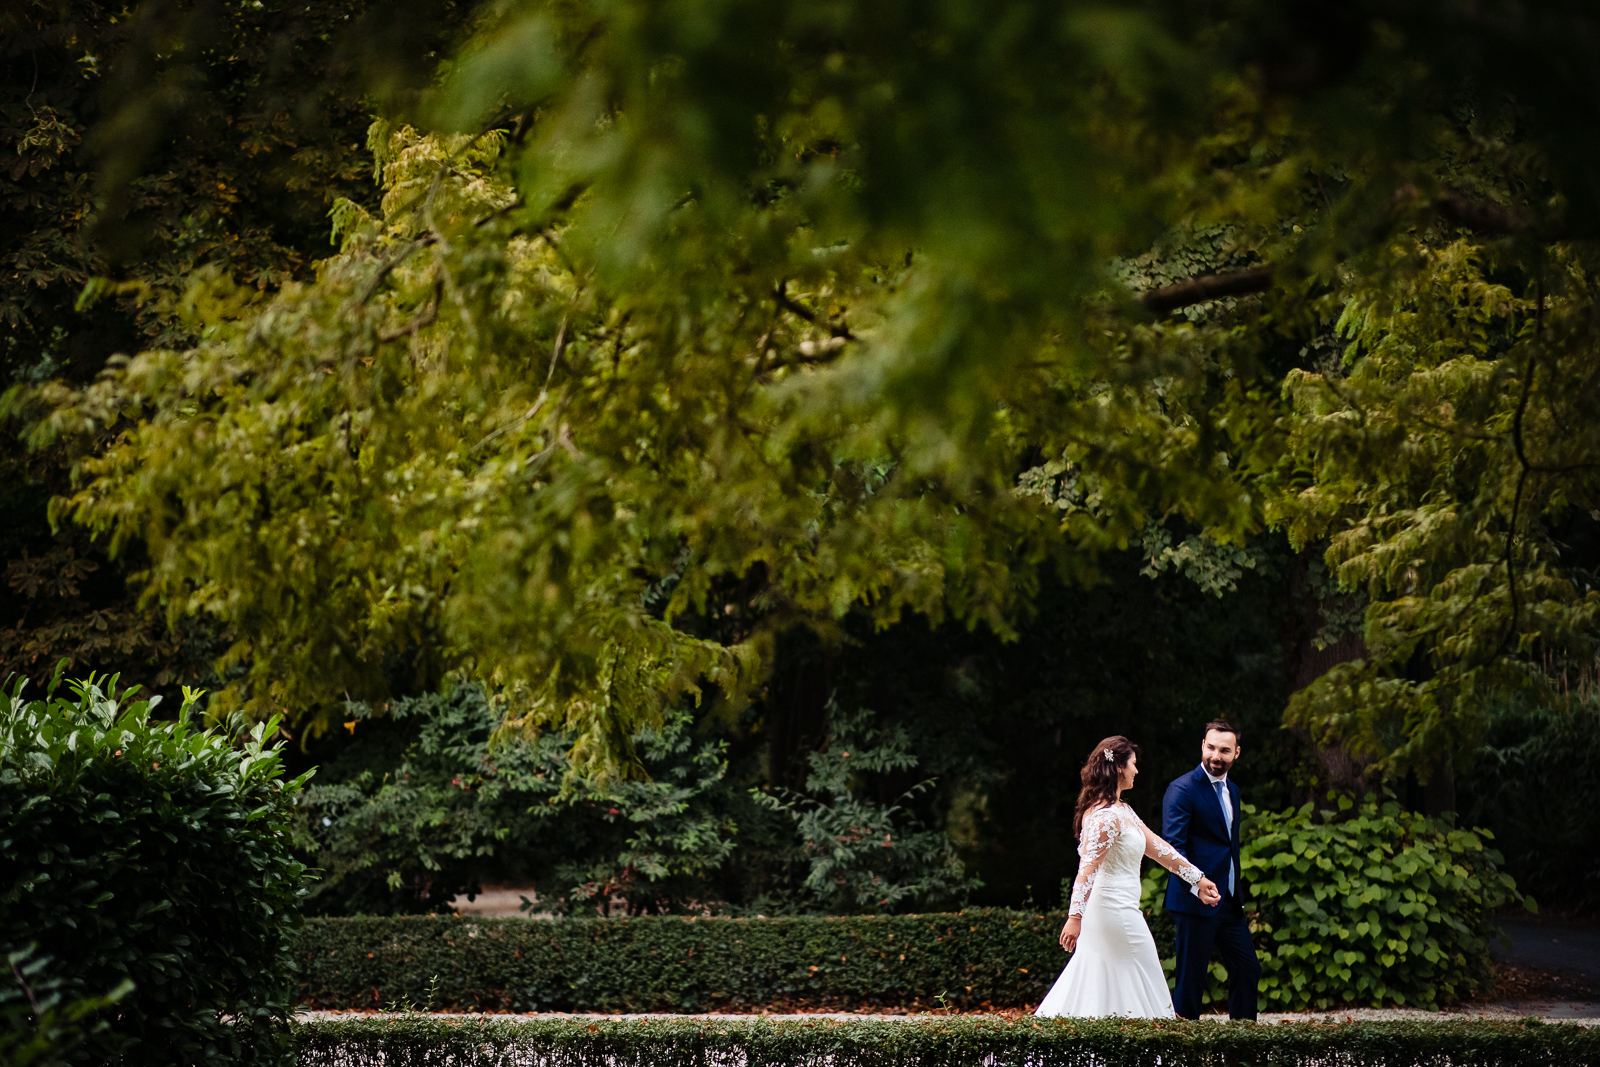 Trouwfotograaf herfst fotoshoot met bruidspaar